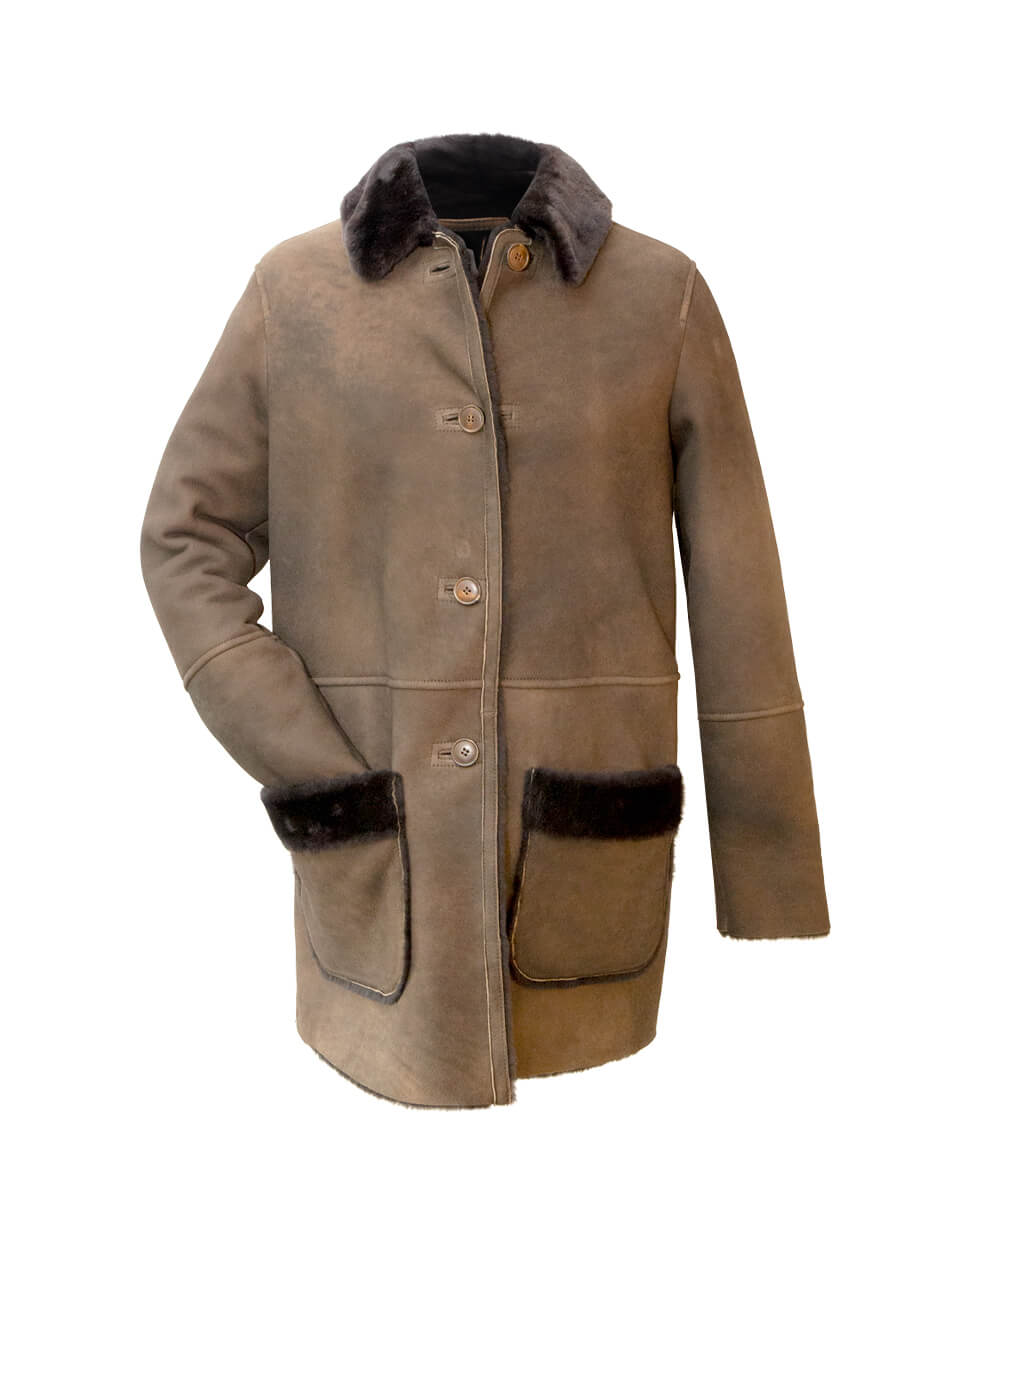 Lambskin Coat Women “Collectors”, kabok